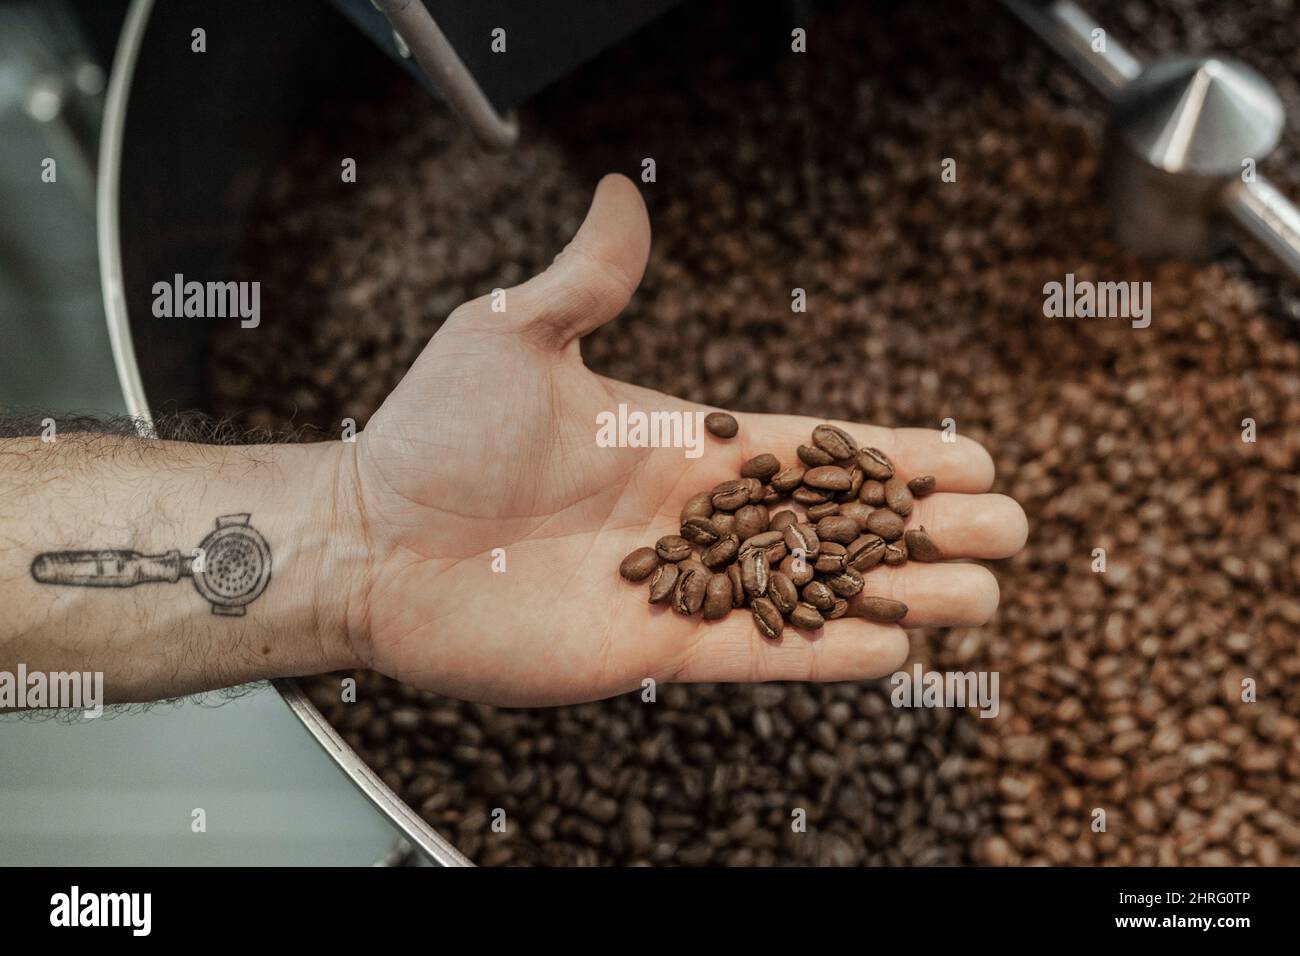 558 Coffee Machine Tattoo Images Stock Photos  Vectors  Shutterstock